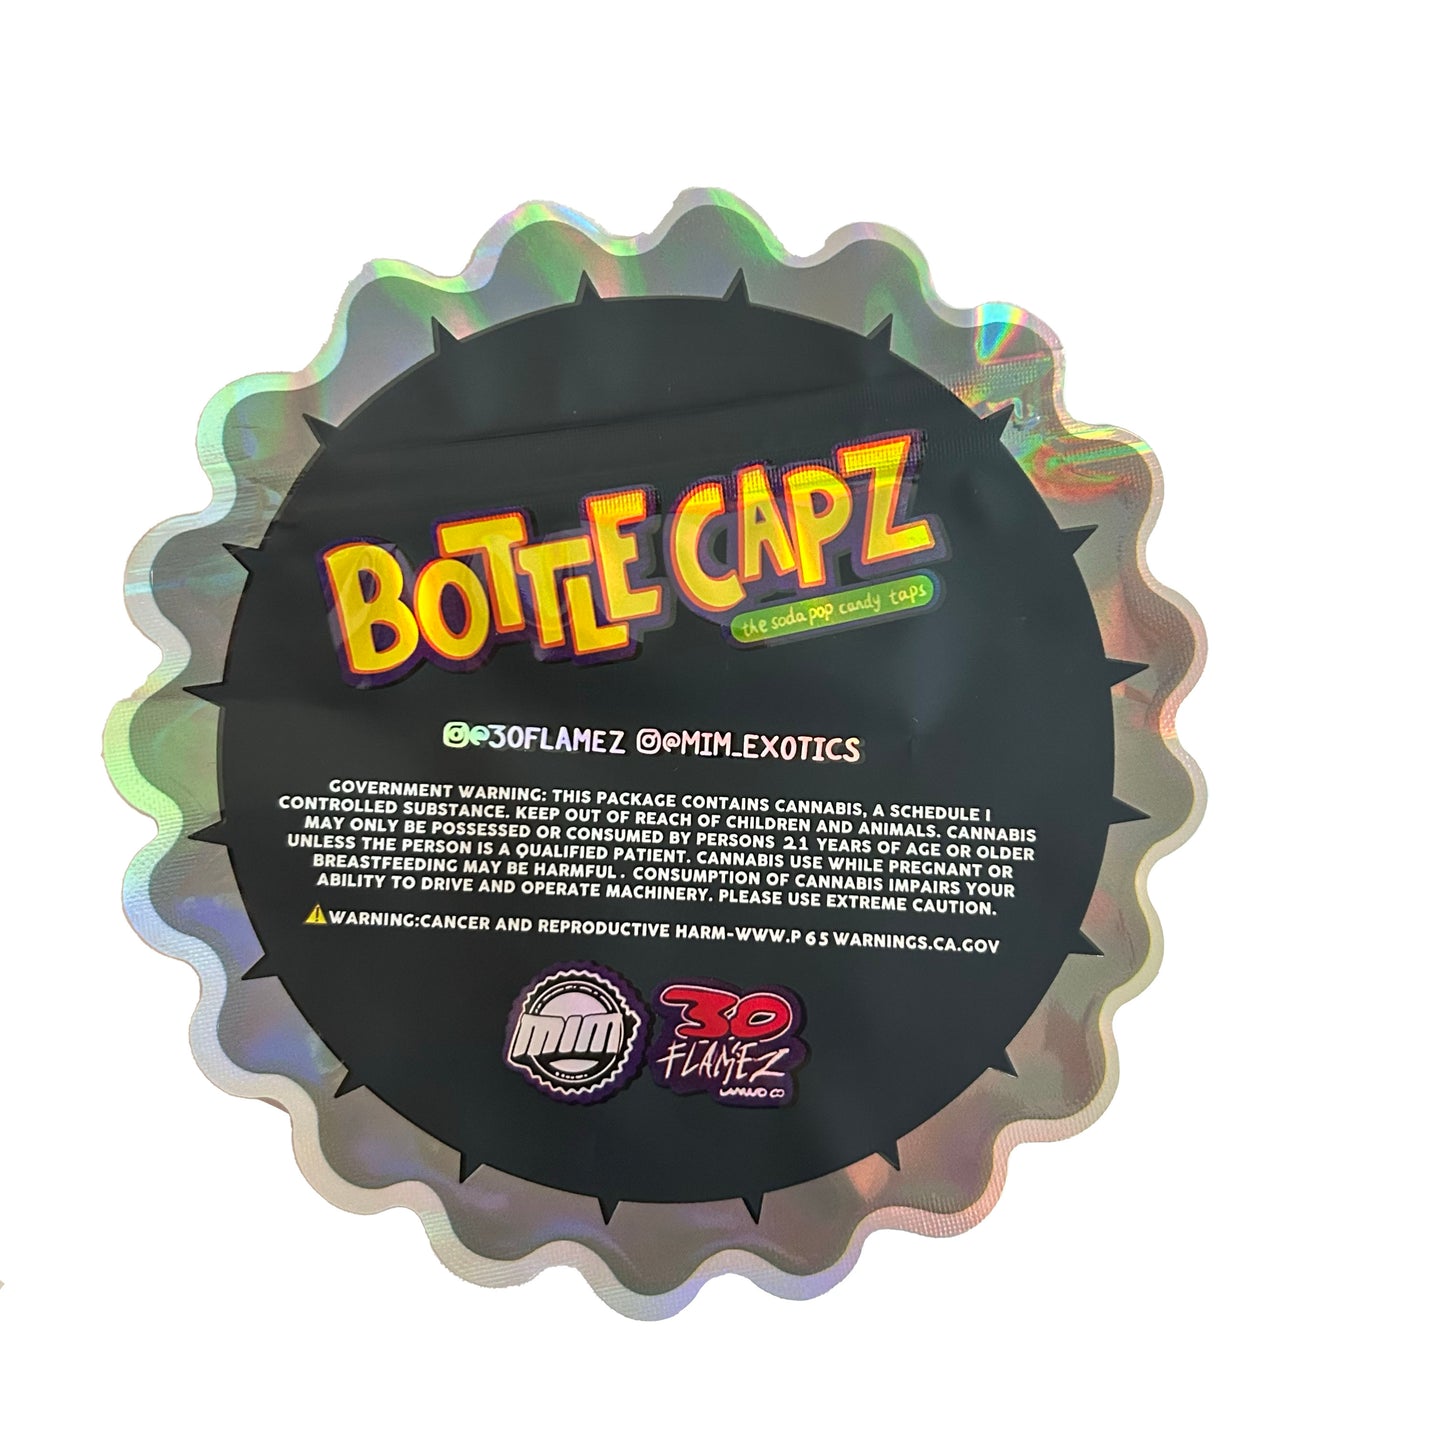 Bottle Capz Holographic Cutout 3.5G Mylar Bags